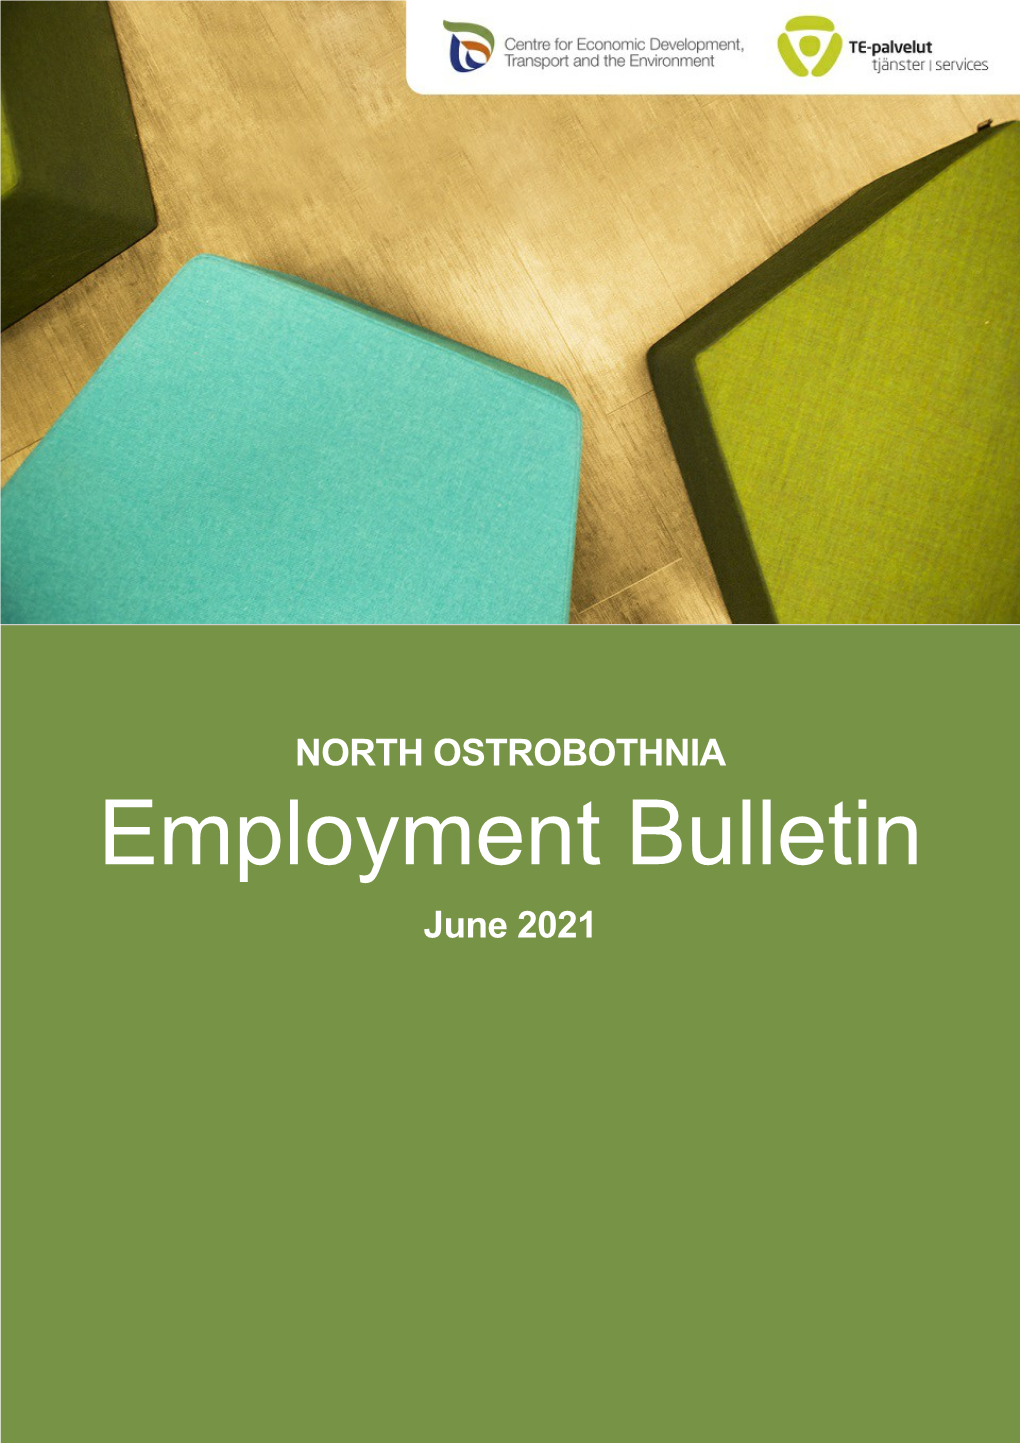 Employment Bulletin June 2021 NORTH OSTROBOTHNIA